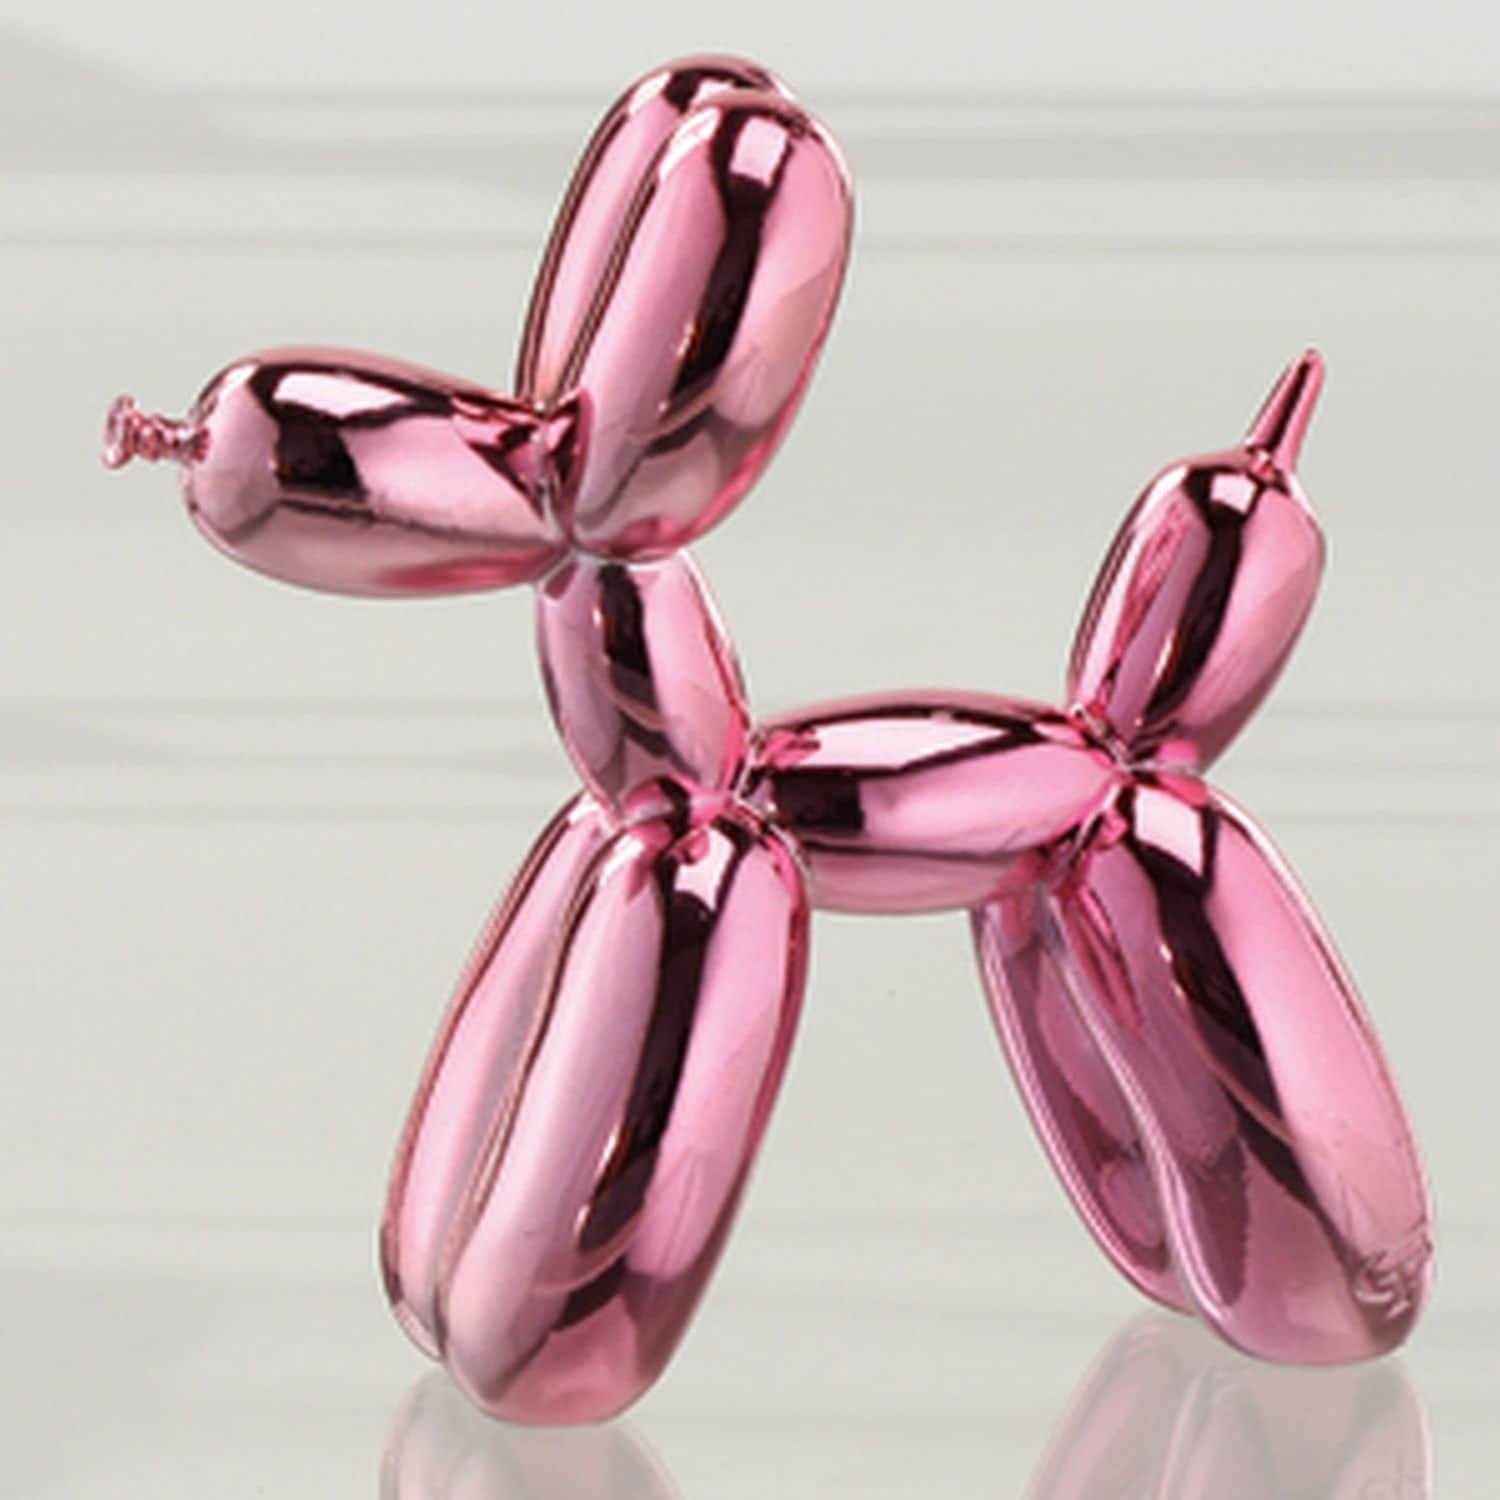 Balloon Dogs- Pink Metallic finish/ Home decor/ Fine craft/ Perfect gift/